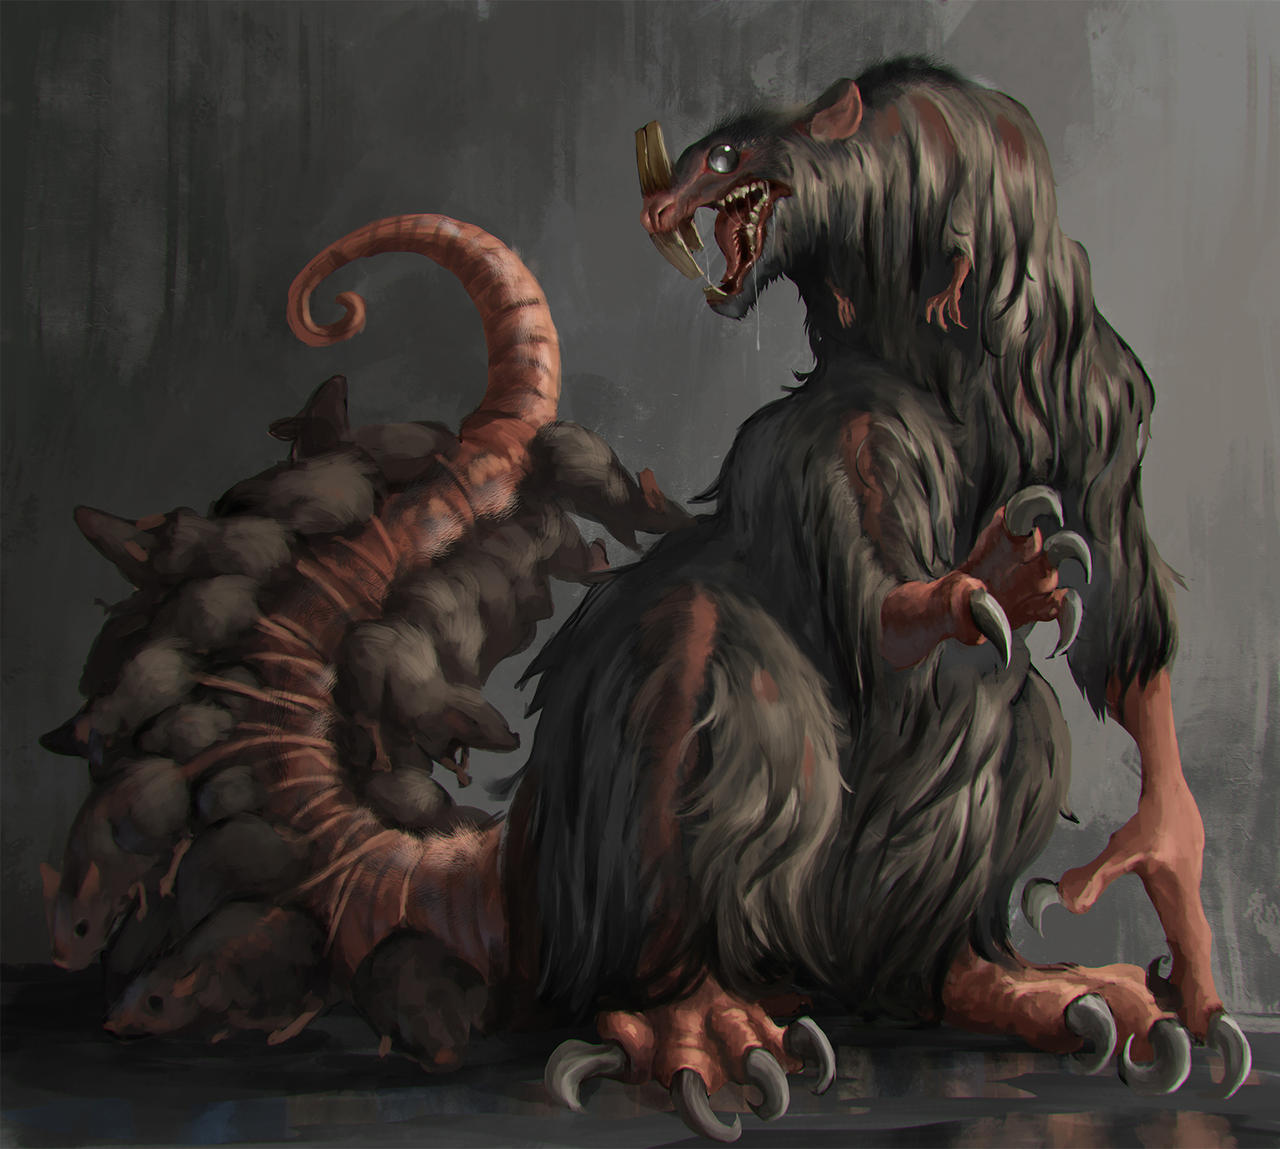 Rat king by Muns11 on DeviantArt